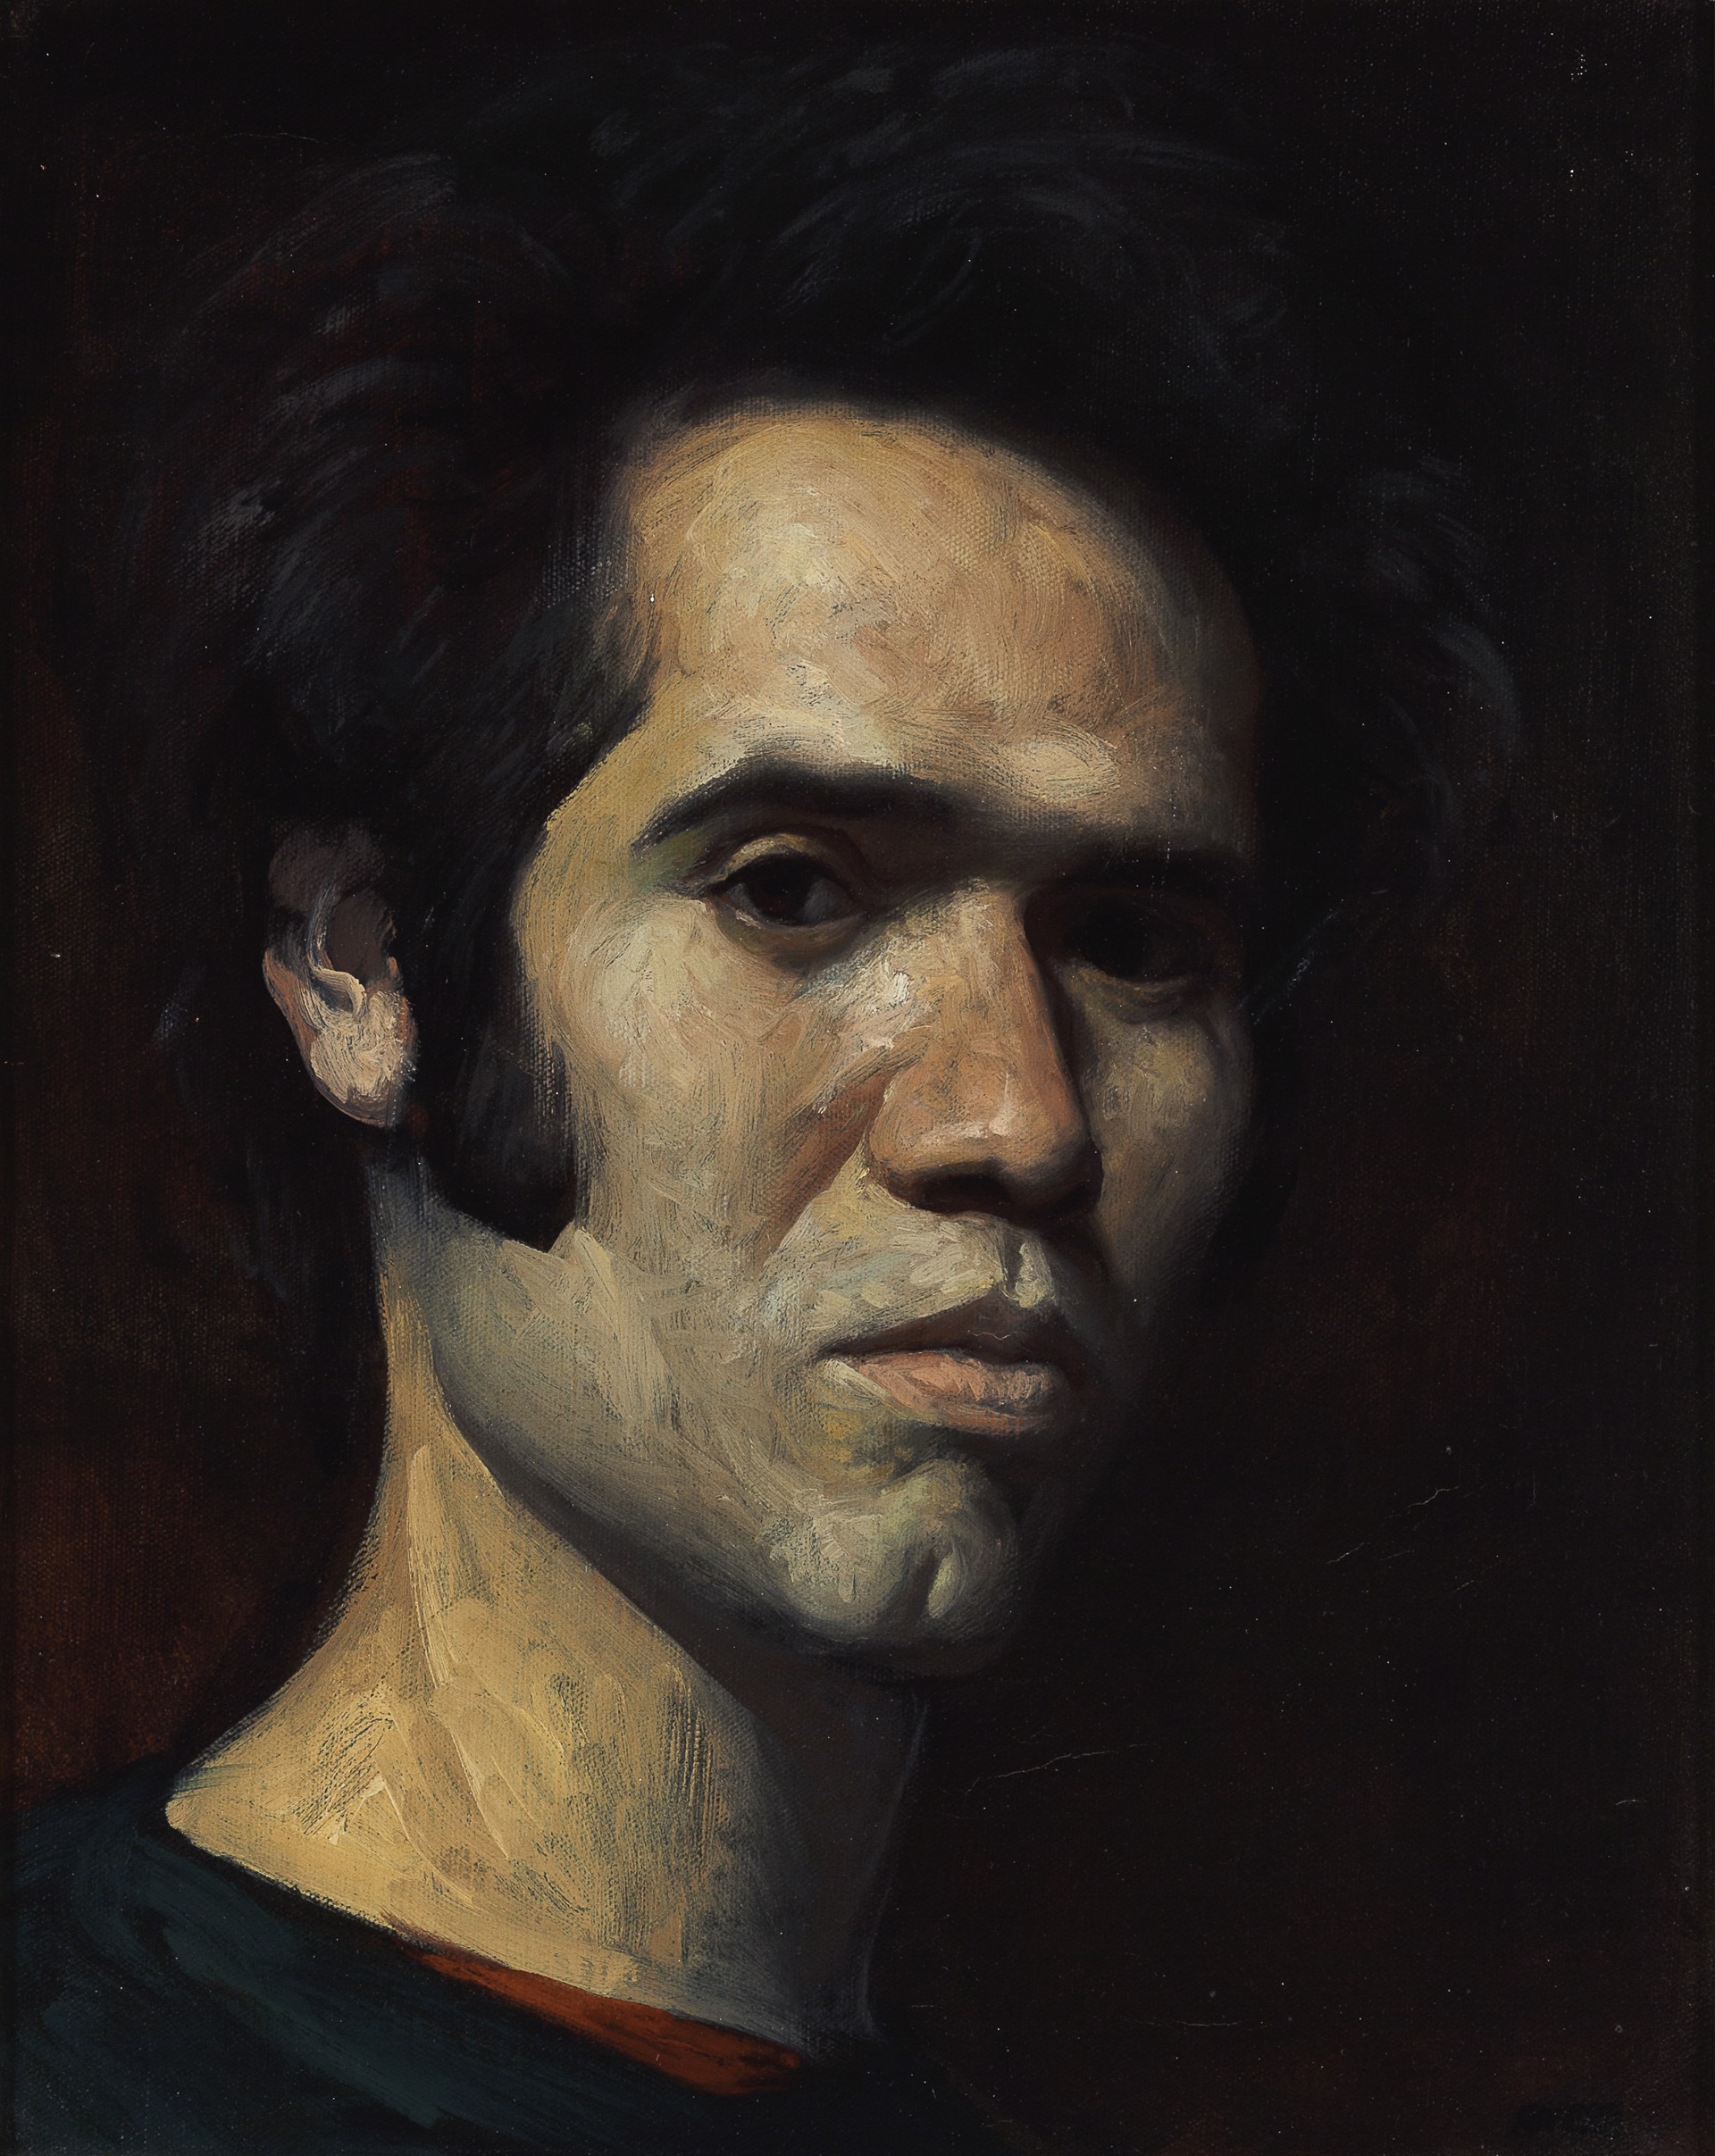 Untitled (Self Portrait) by Elias Rivera